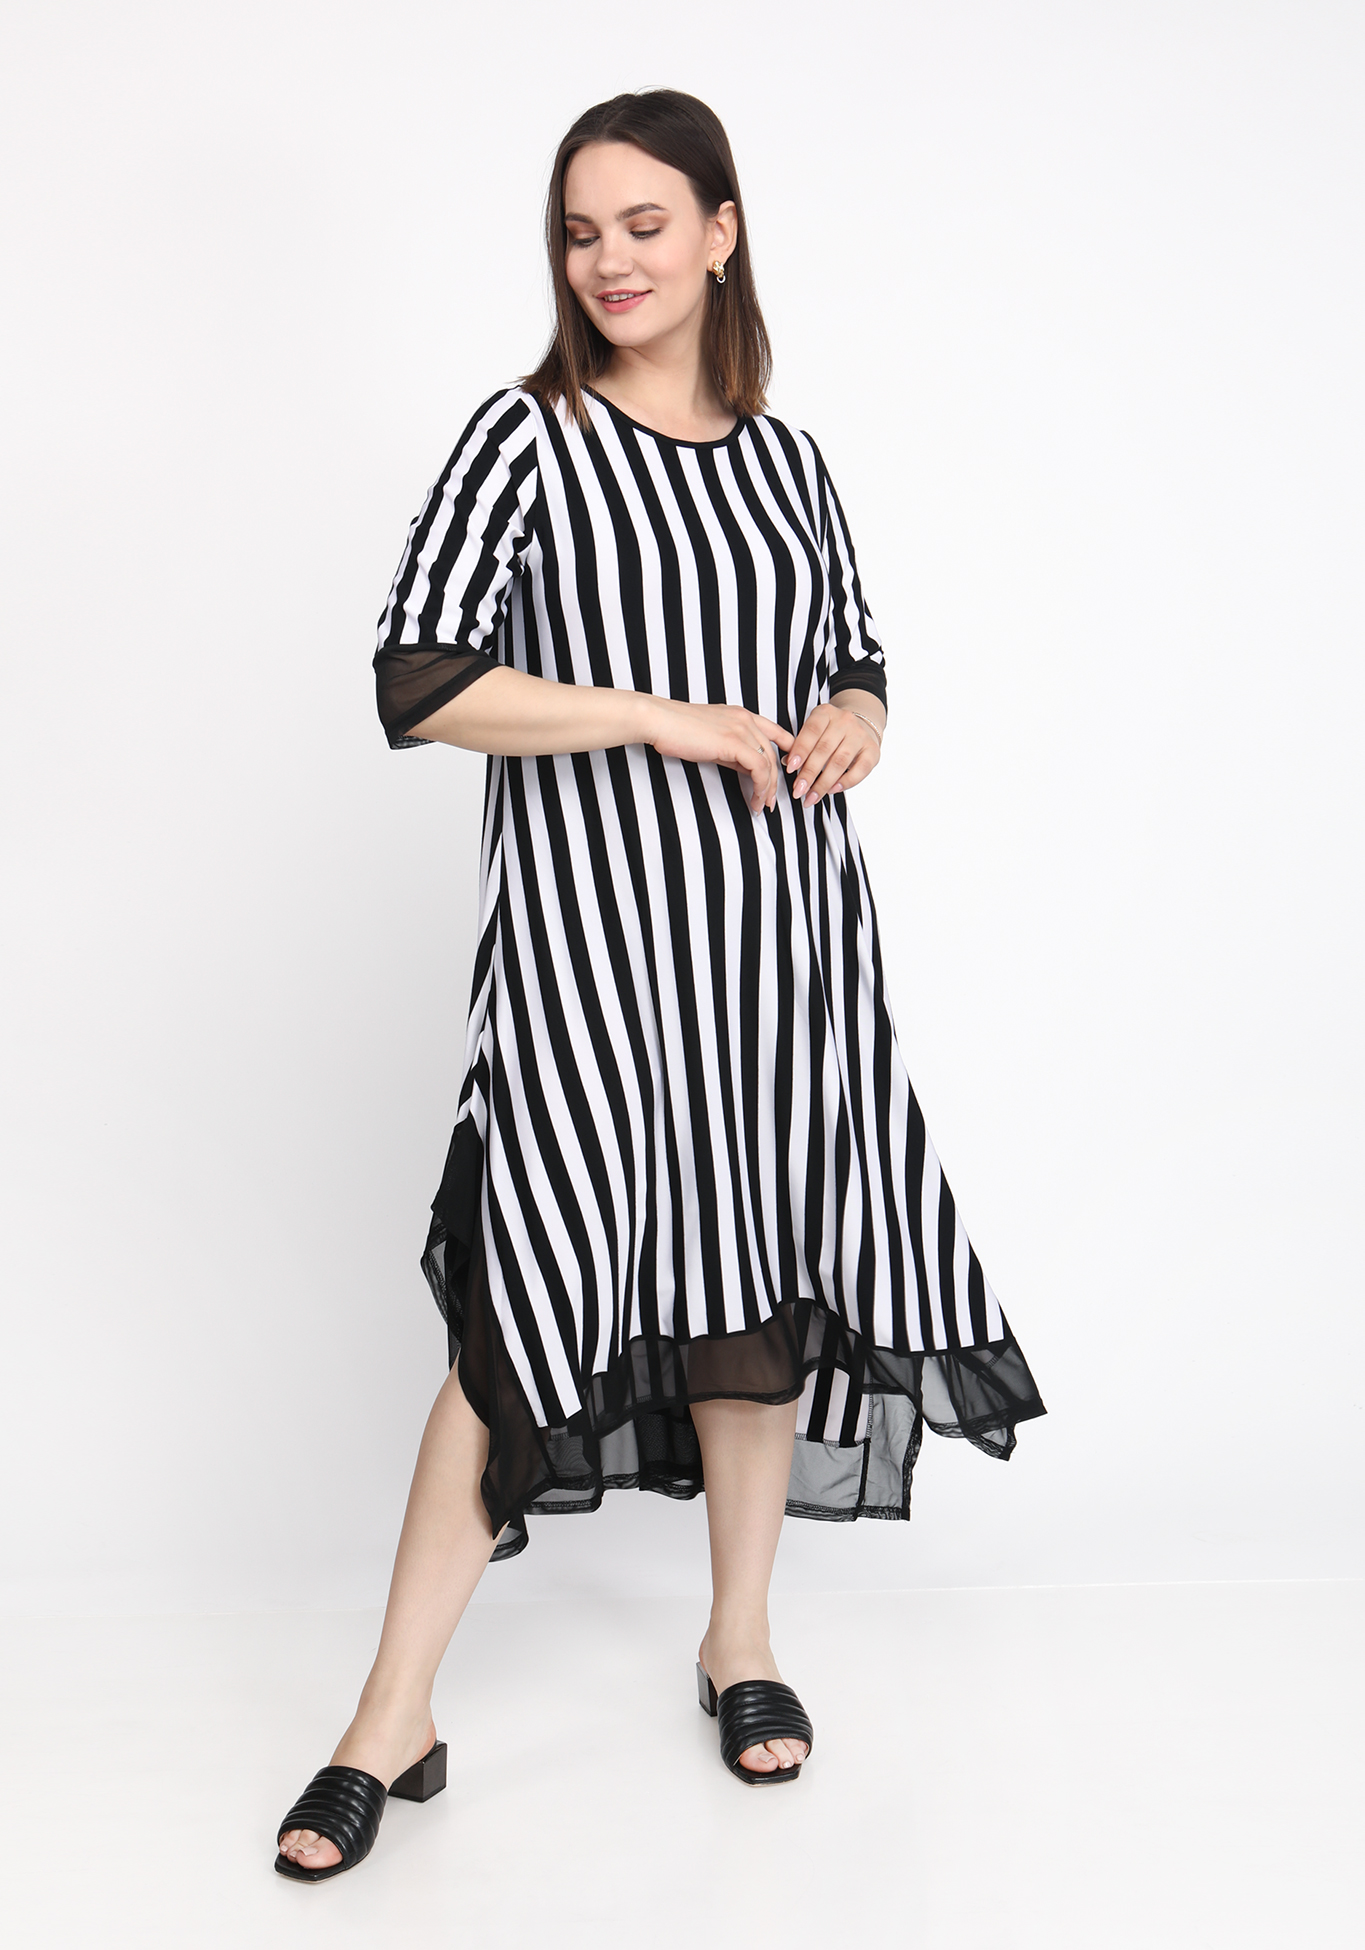 Платье "Чарующий силуэт" ZORY, размер 54, цвет черно-белый - фото 1